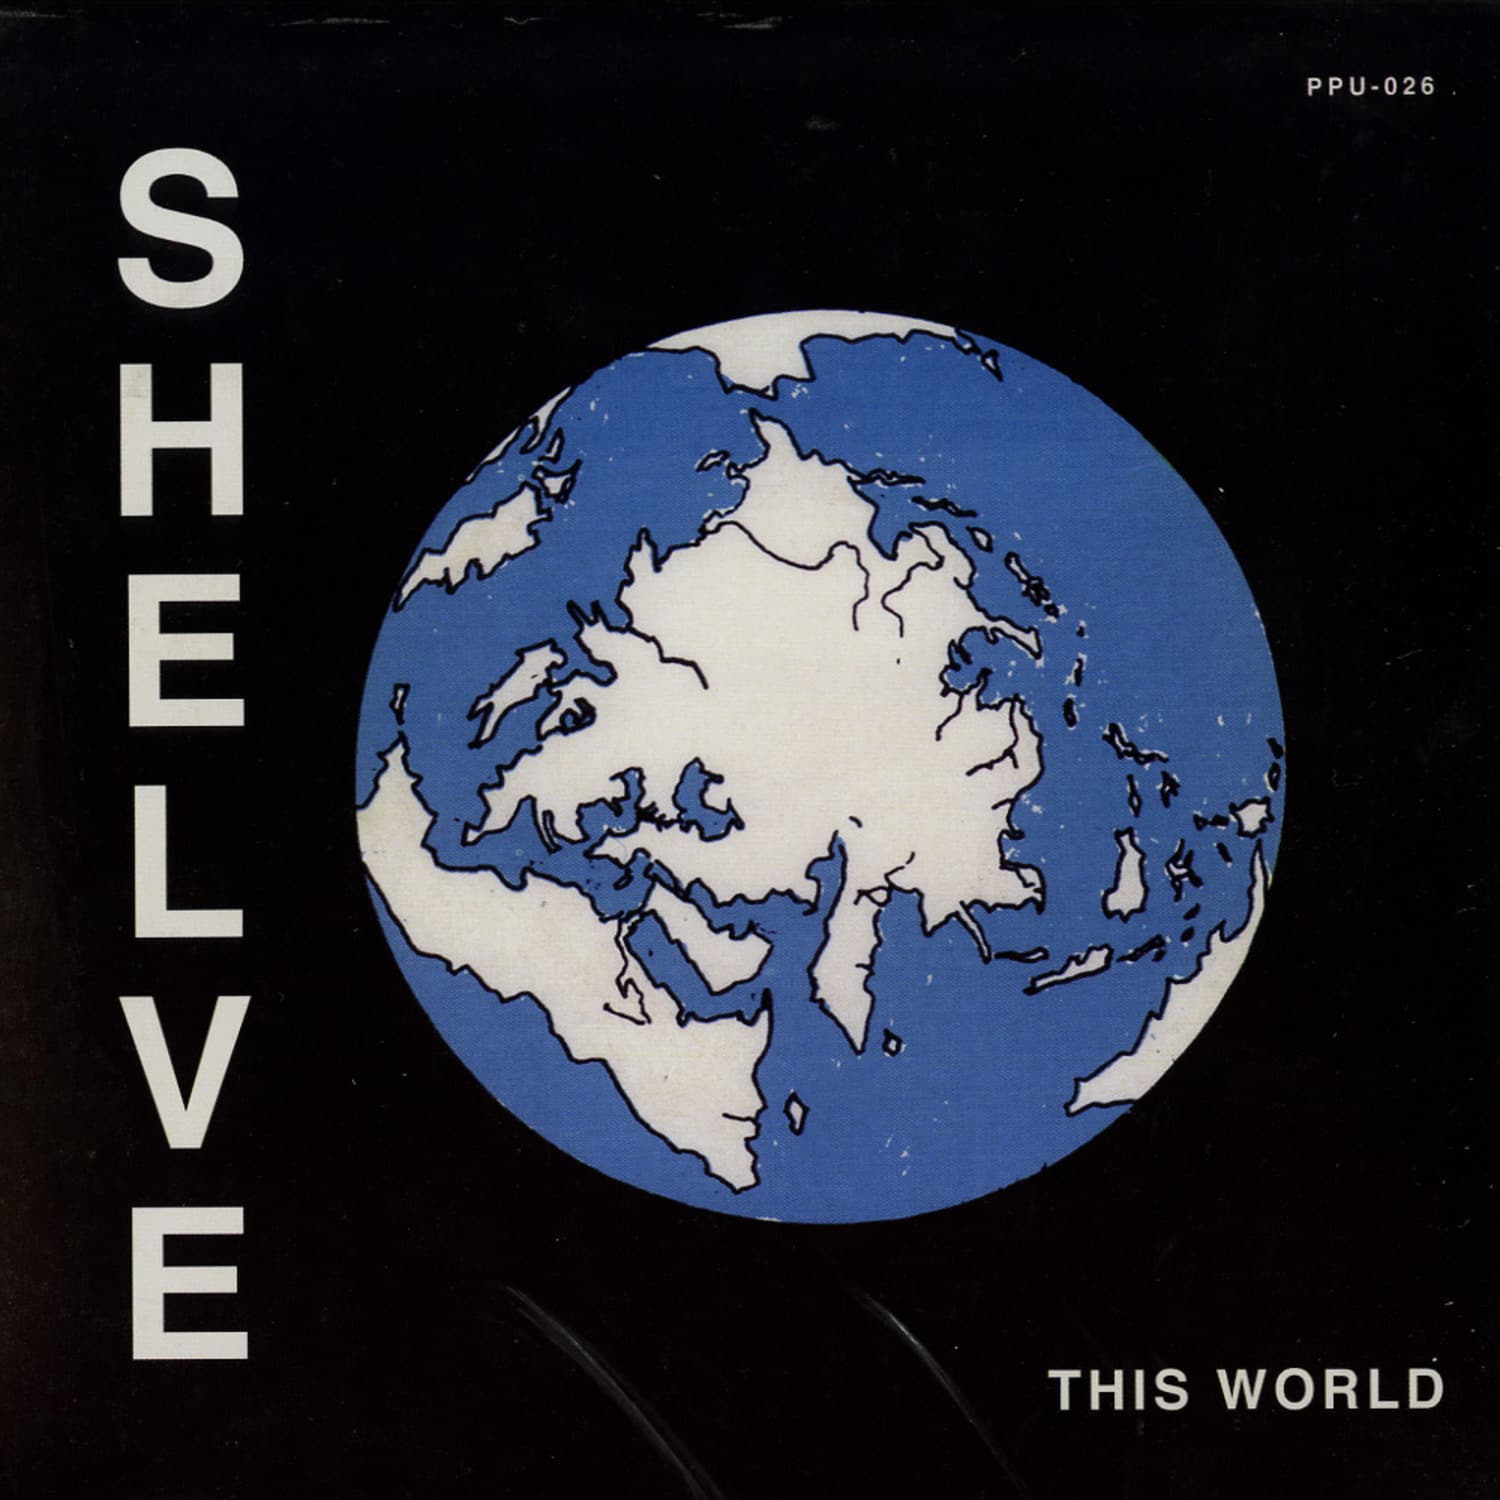 Shelve - This World 